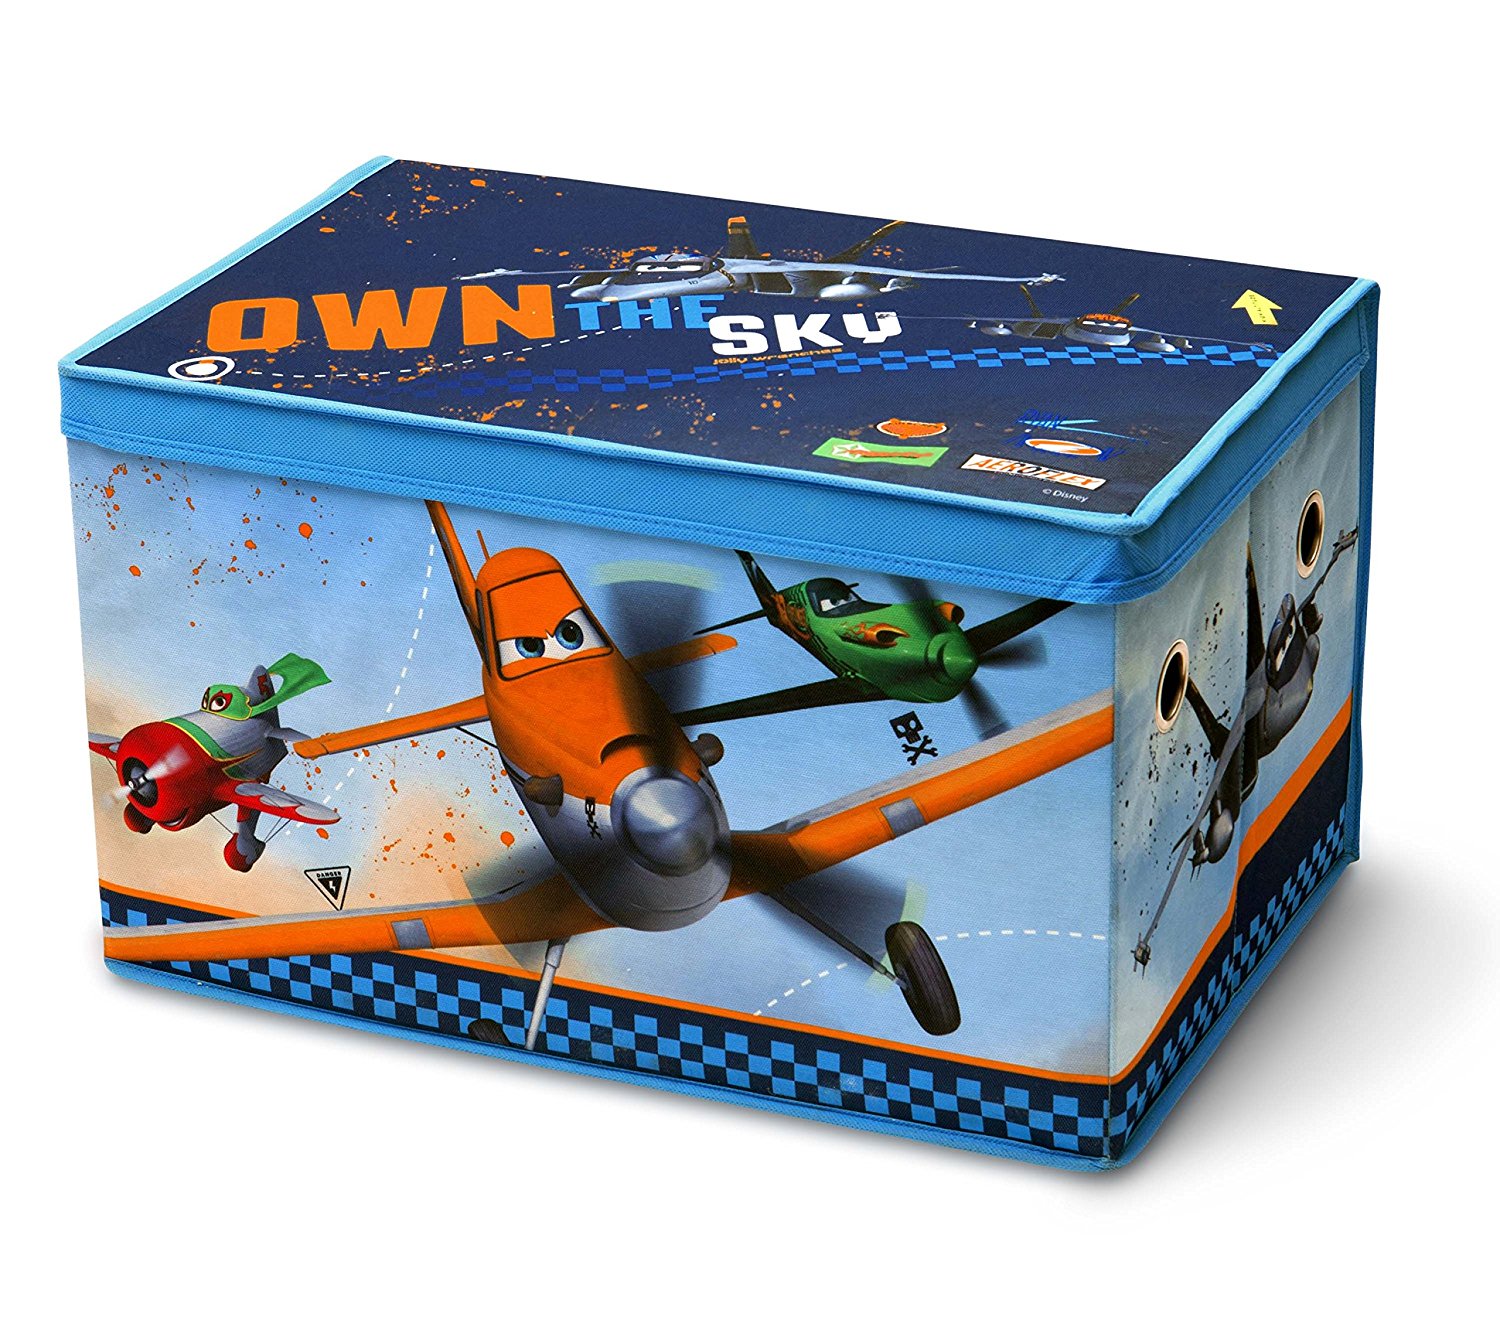 Disney planes toy box